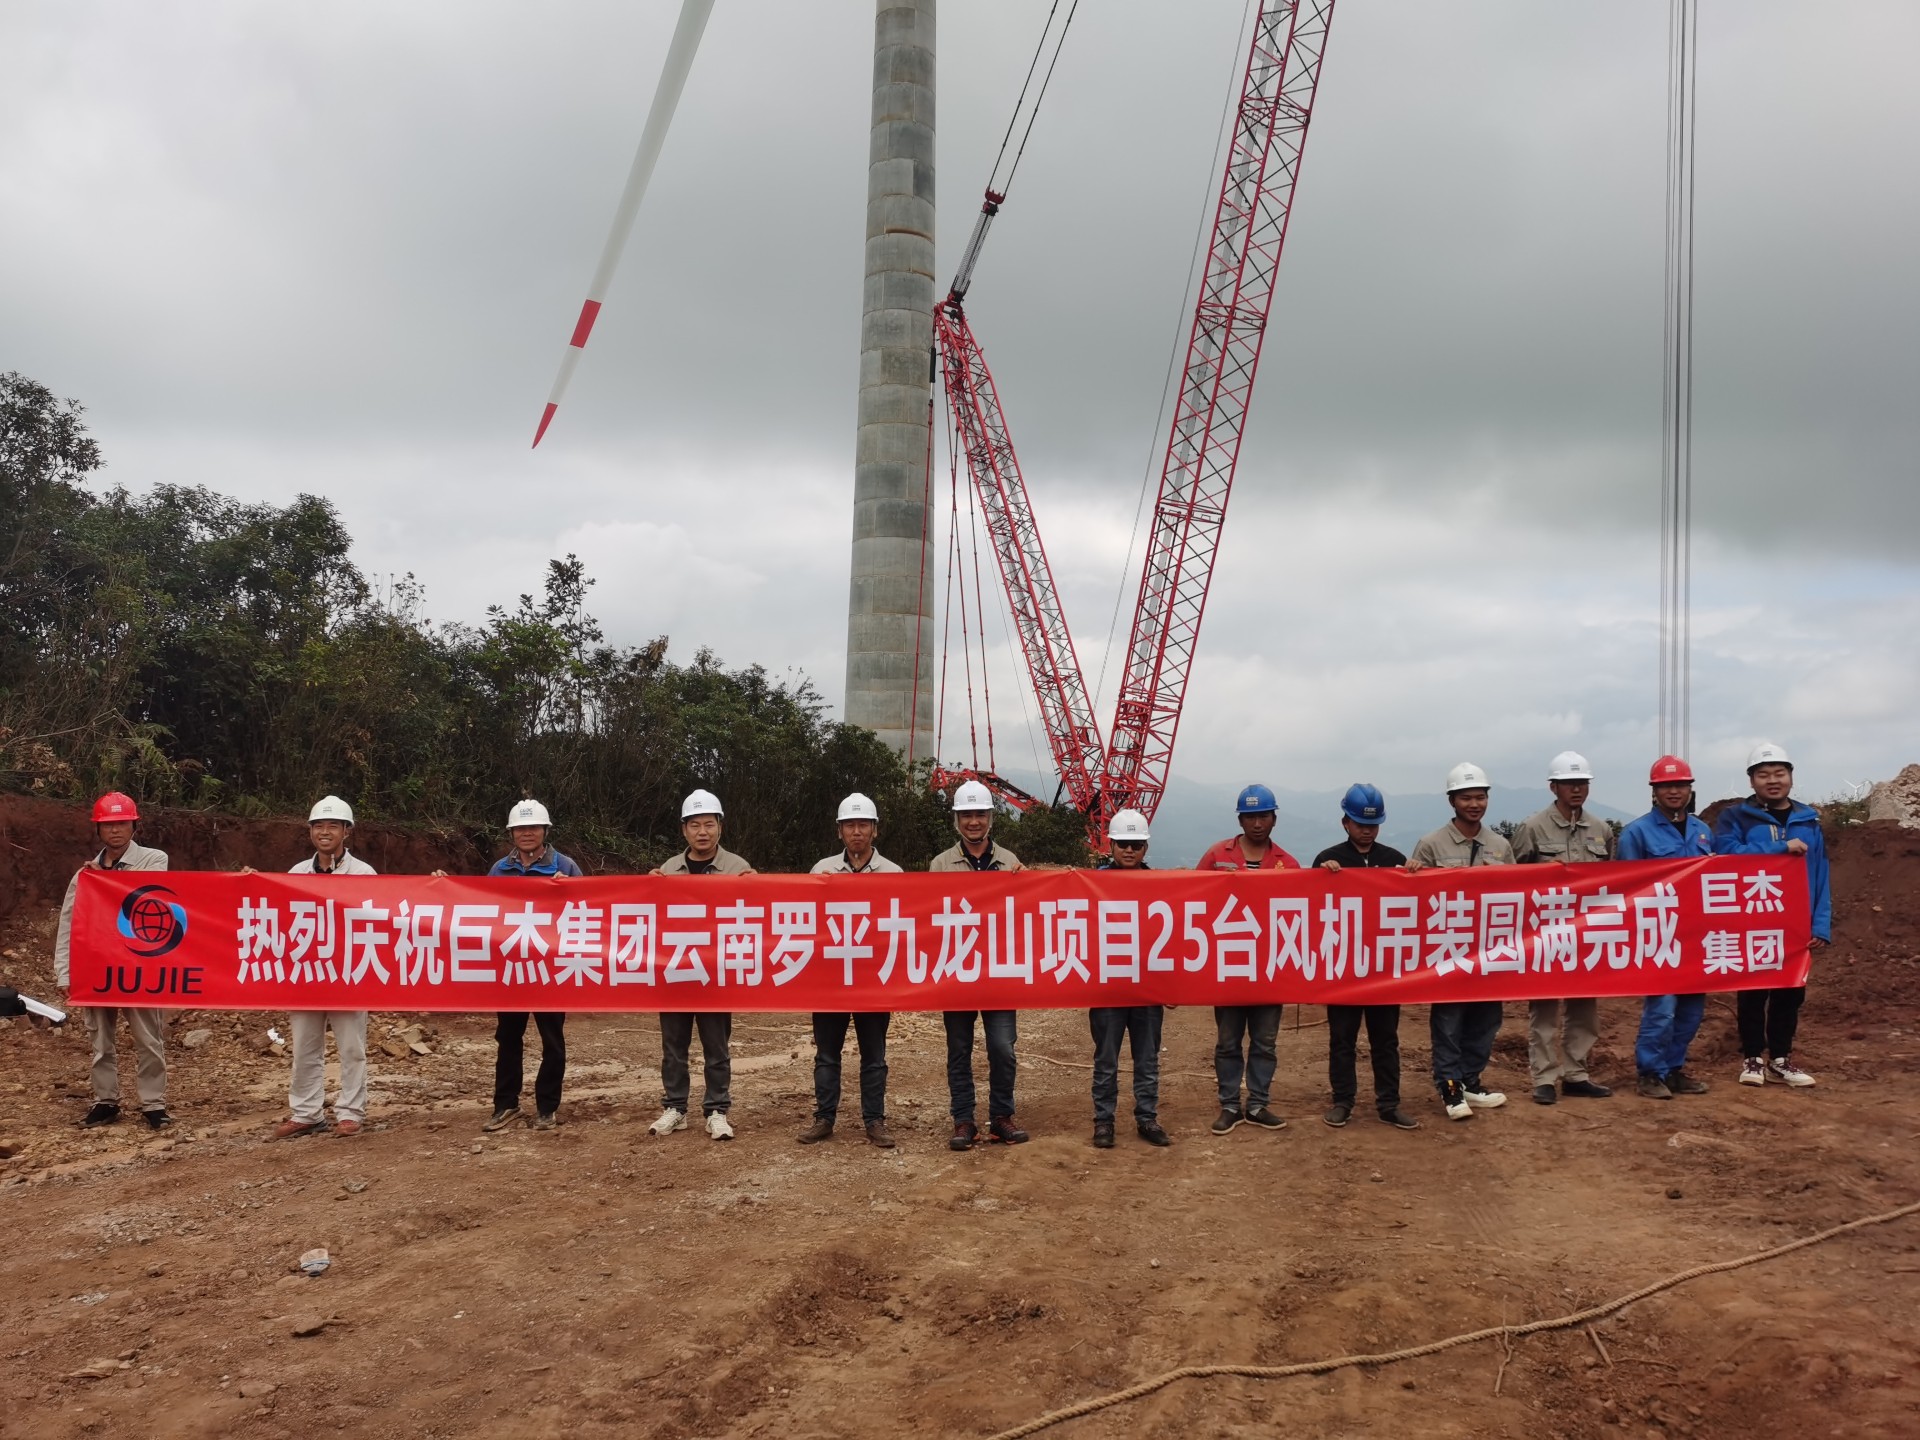 BOB体育综合集团云南罗平九龙山项目25台风机吊装圆满完成